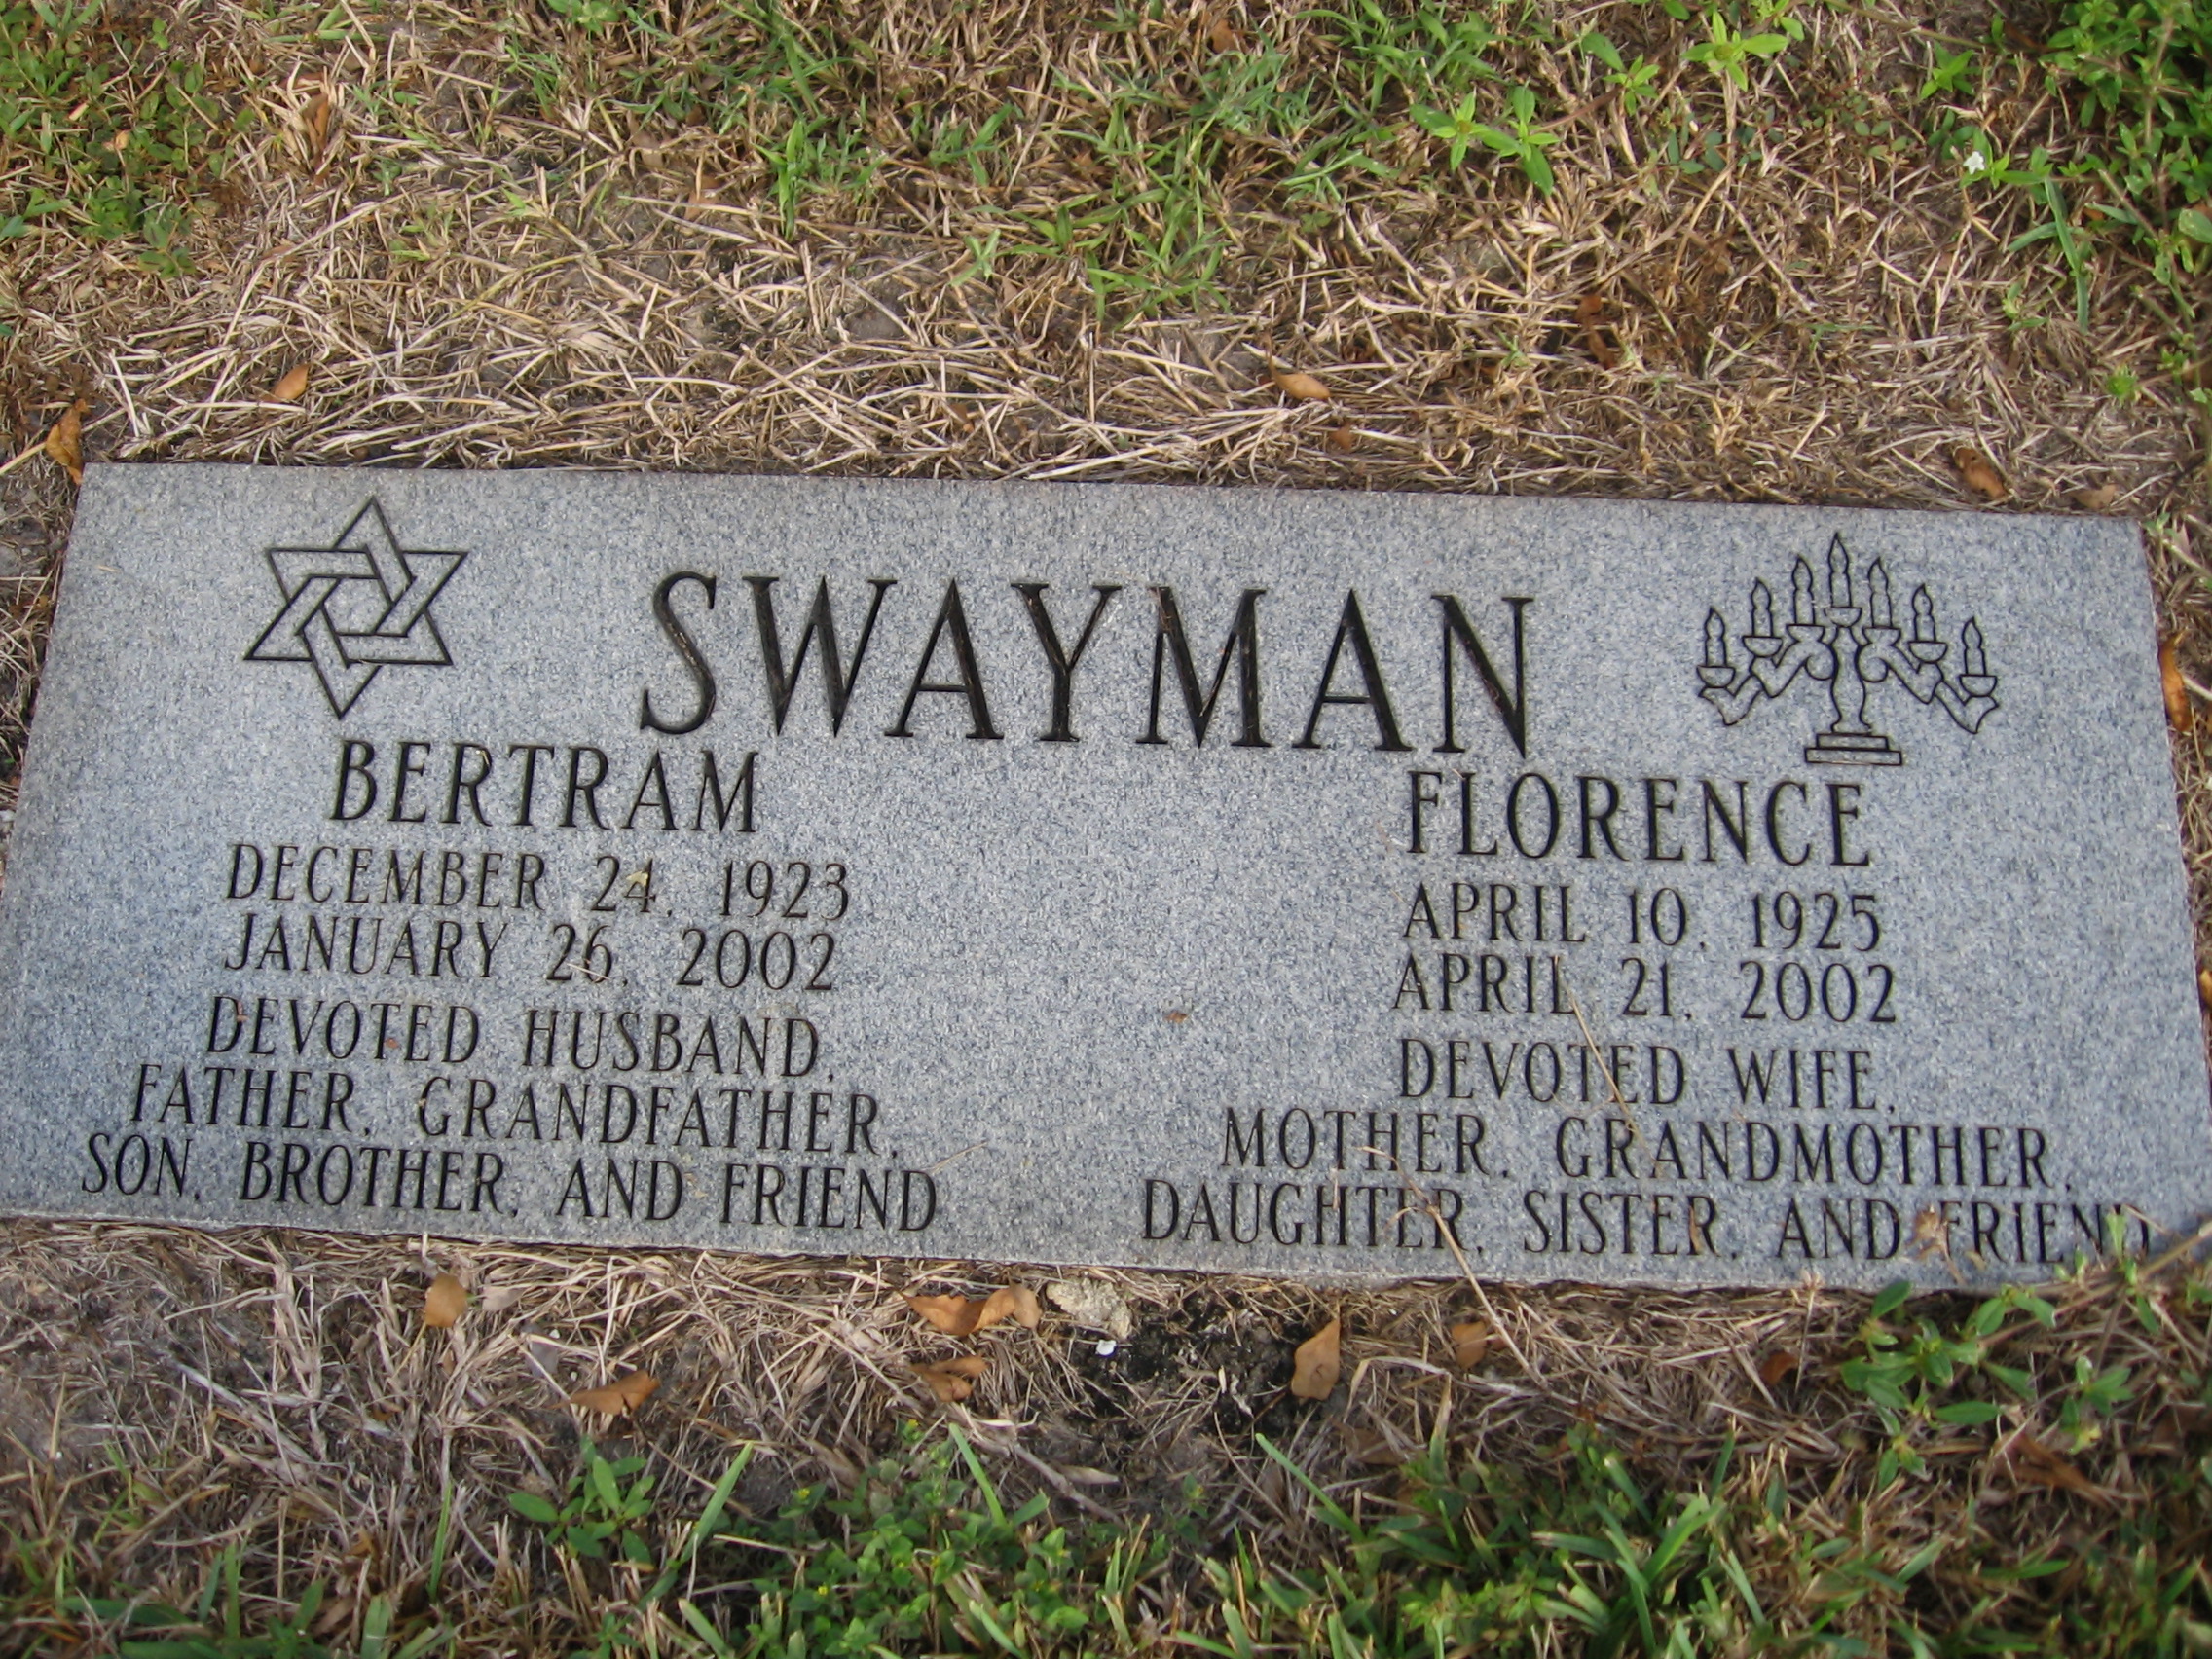 Bertram Swayman